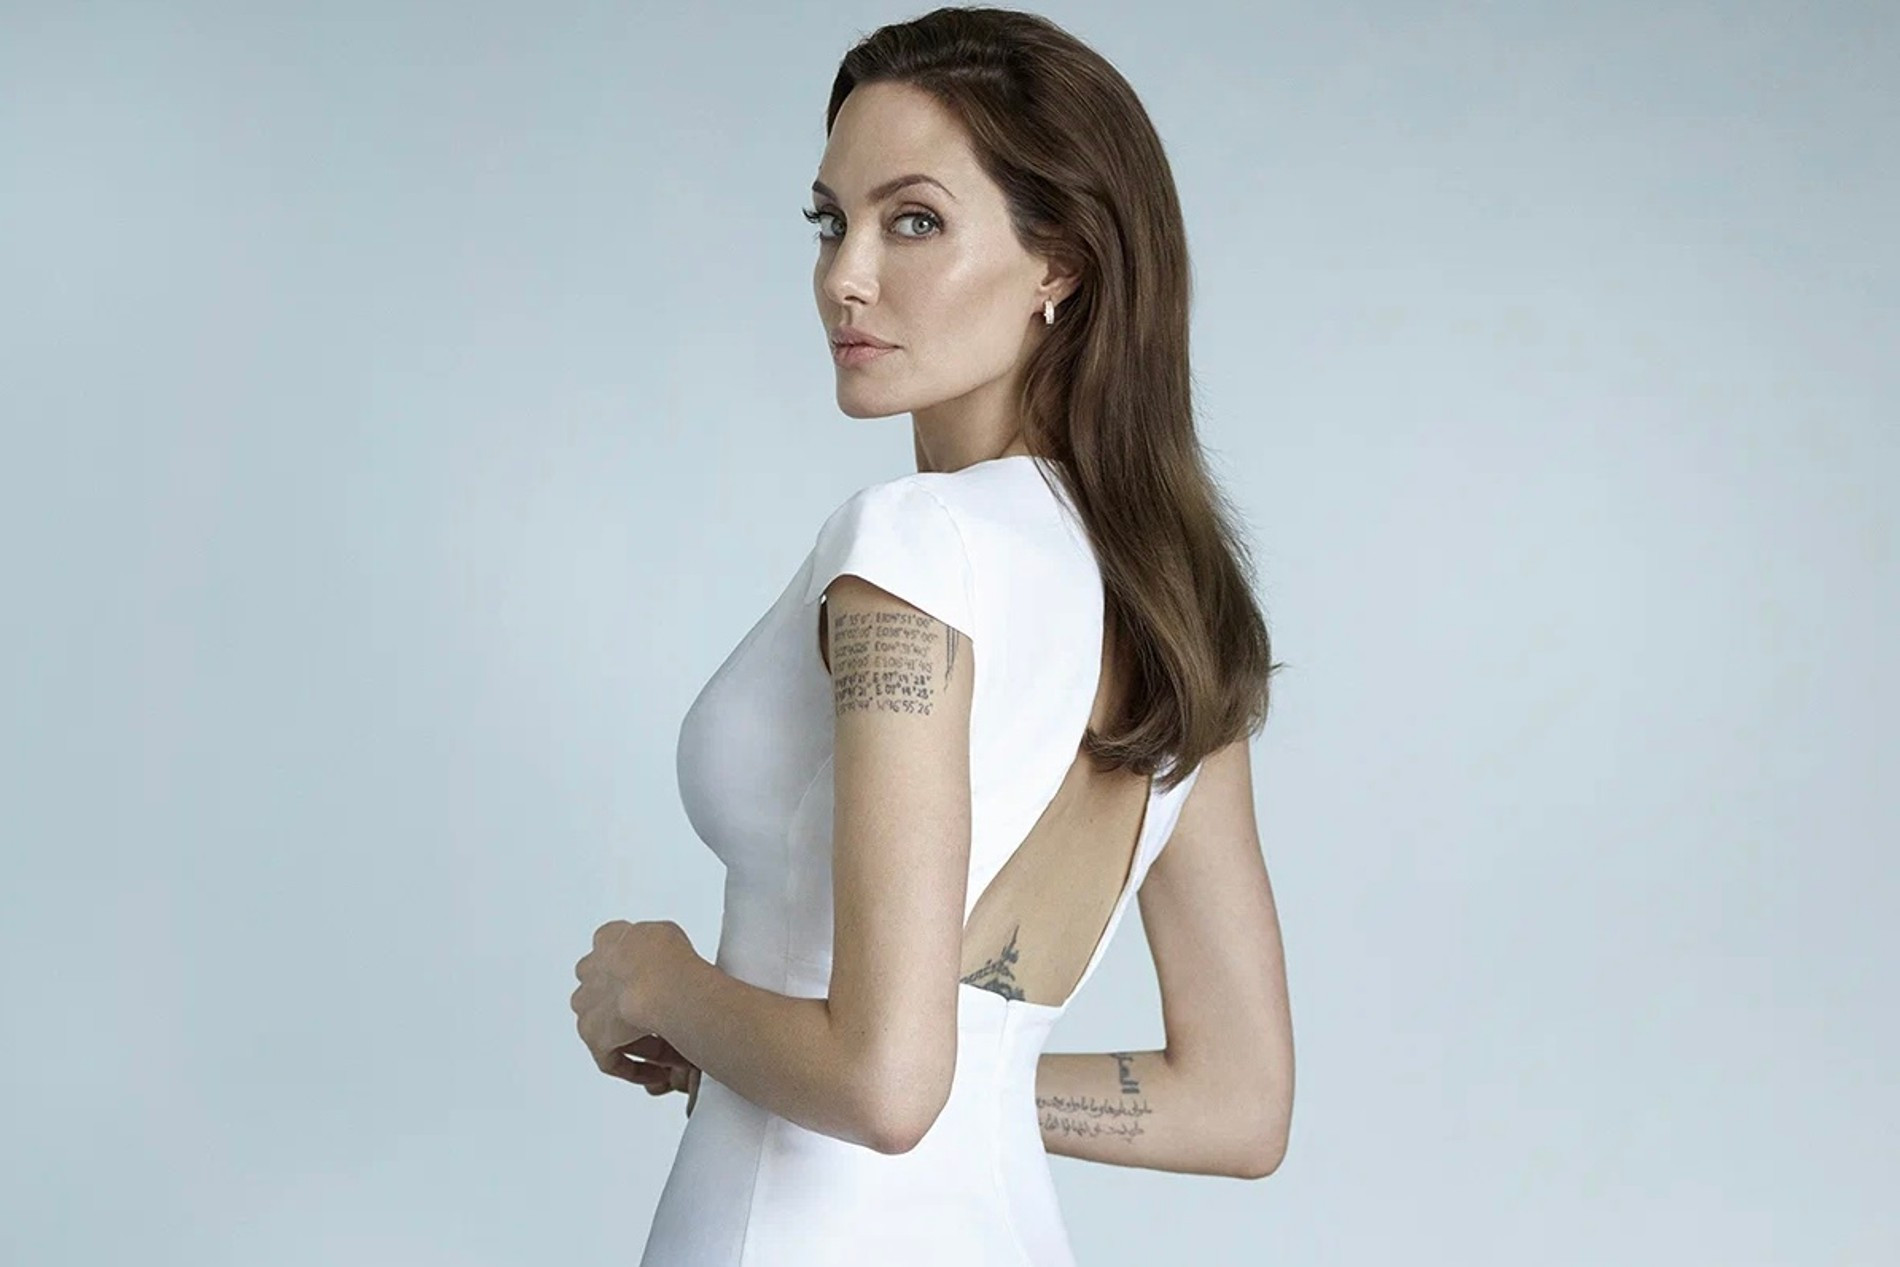 Анджелина Джоли
Фото: Инстаграм (запрещен в РФ)